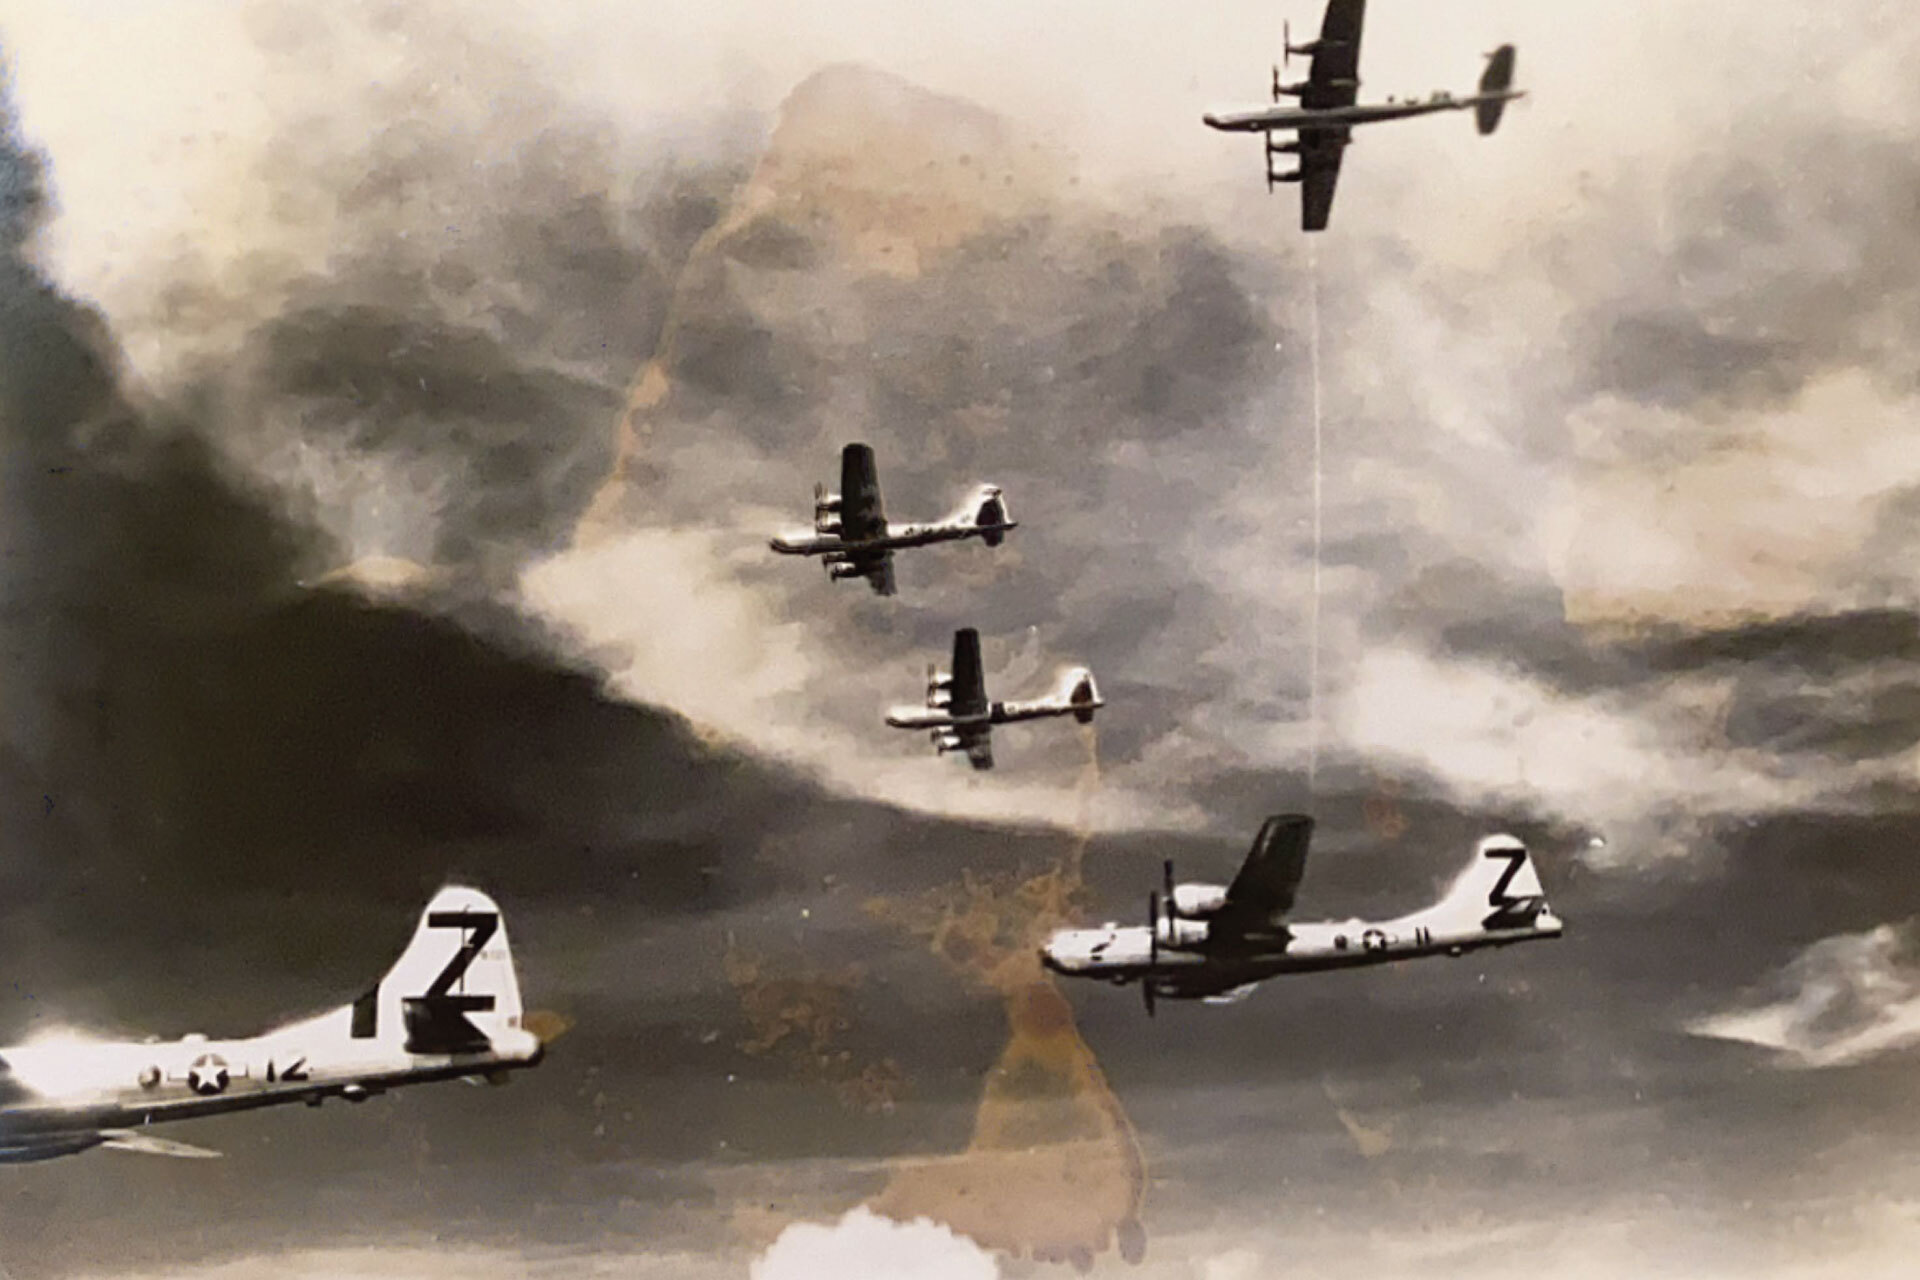 Deteriorating scanned photo shows World War 2 planes in flight